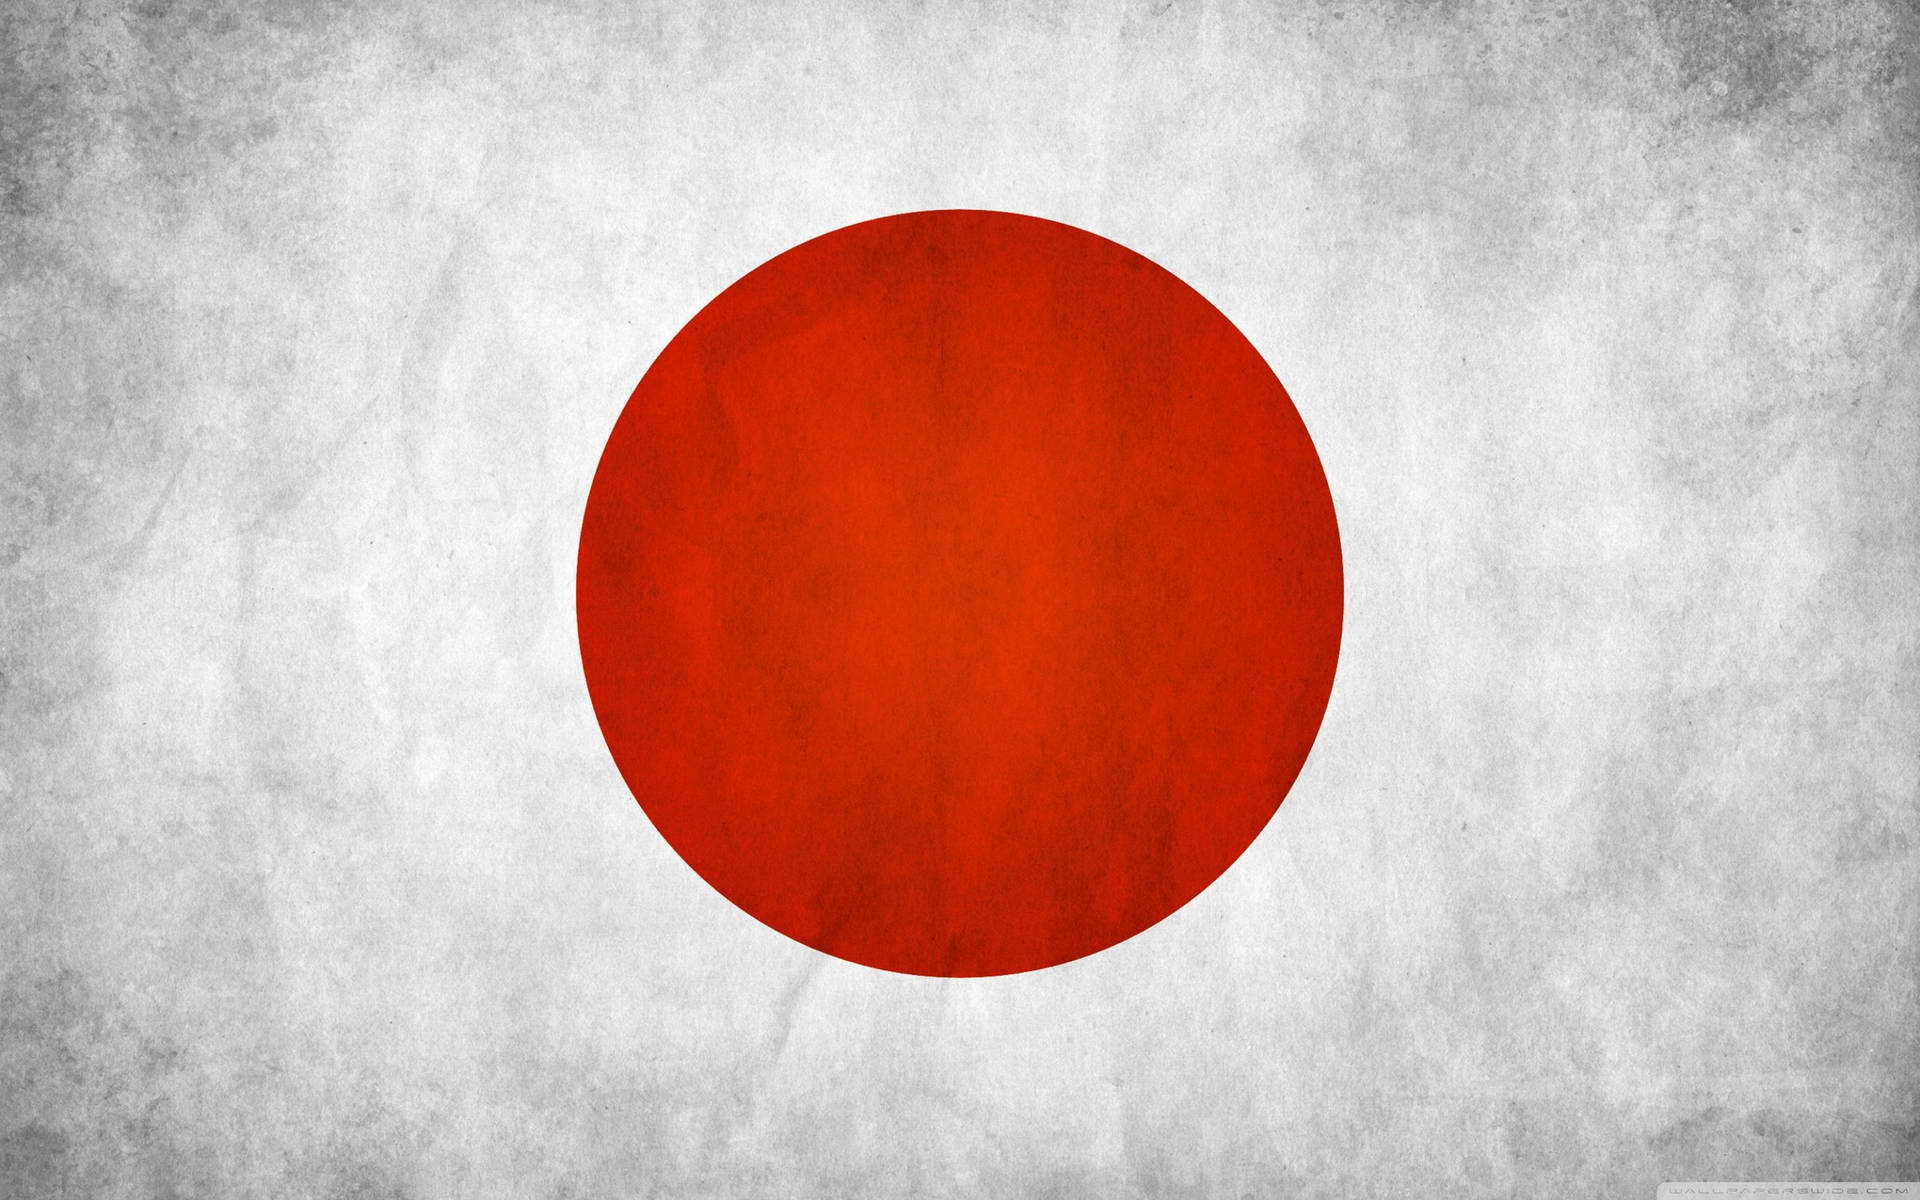 Japanischeflagge In Einer Grau Verhangenen Szene Wallpaper